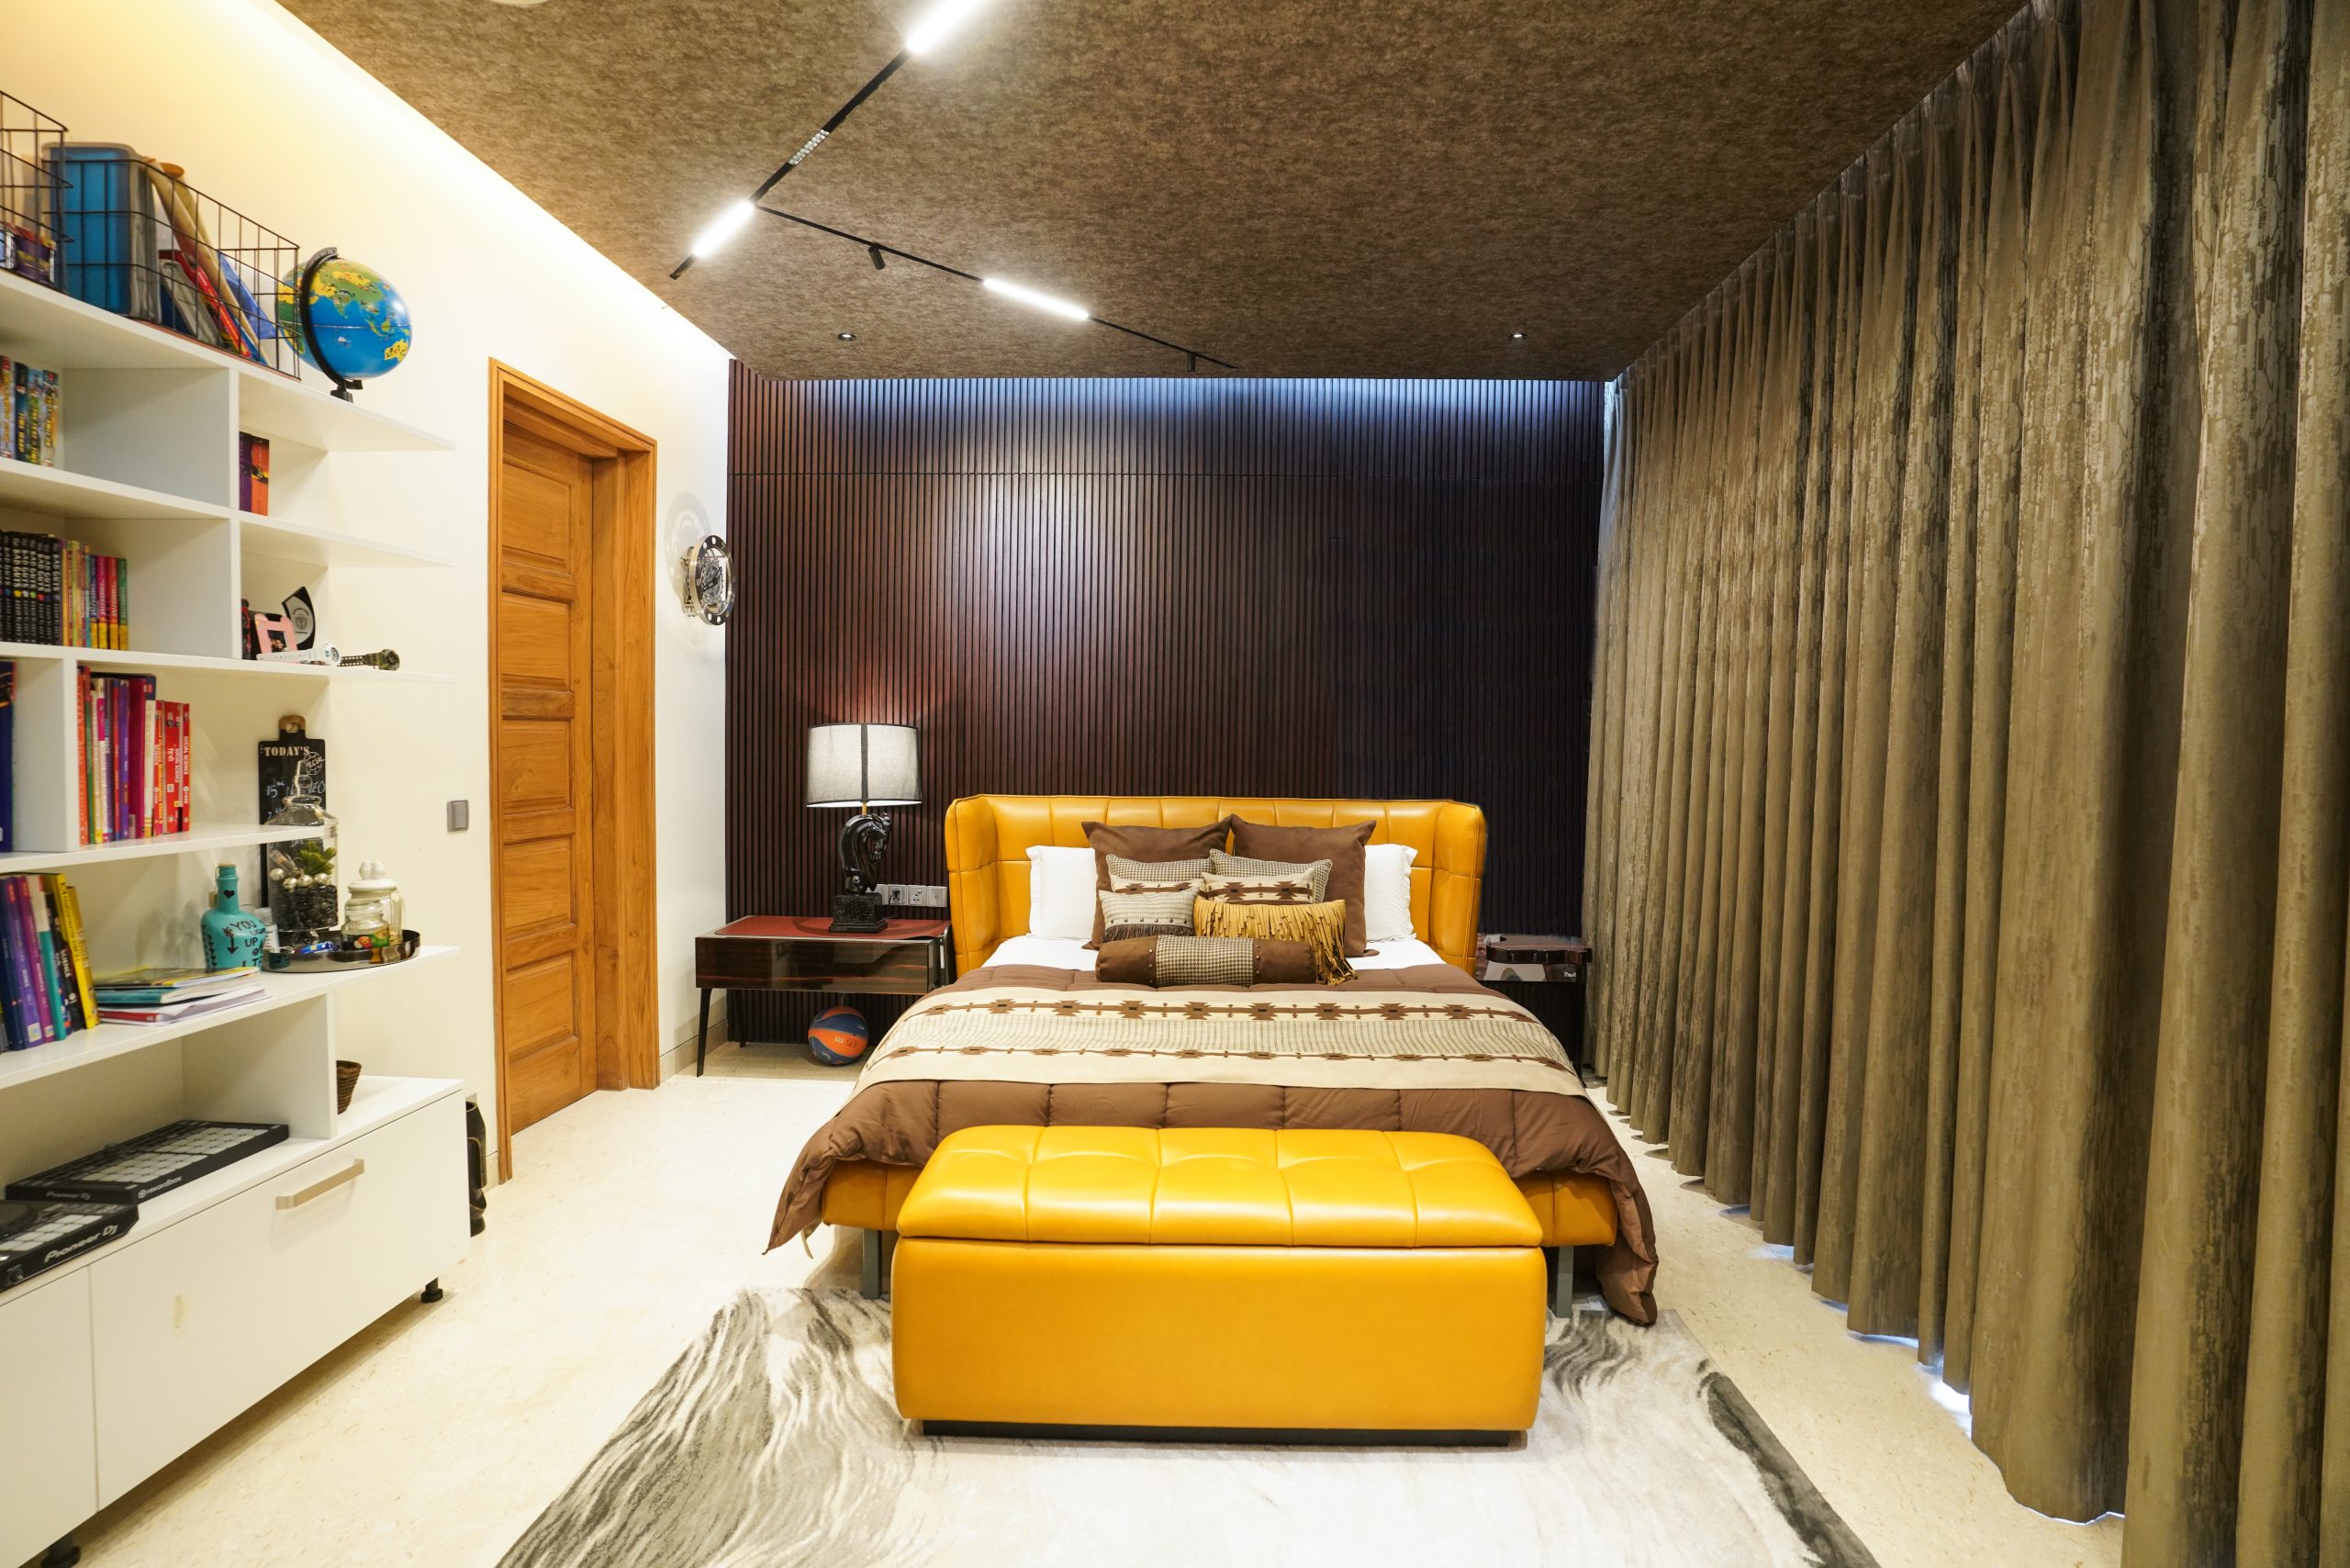 Interior designing of a bedroom